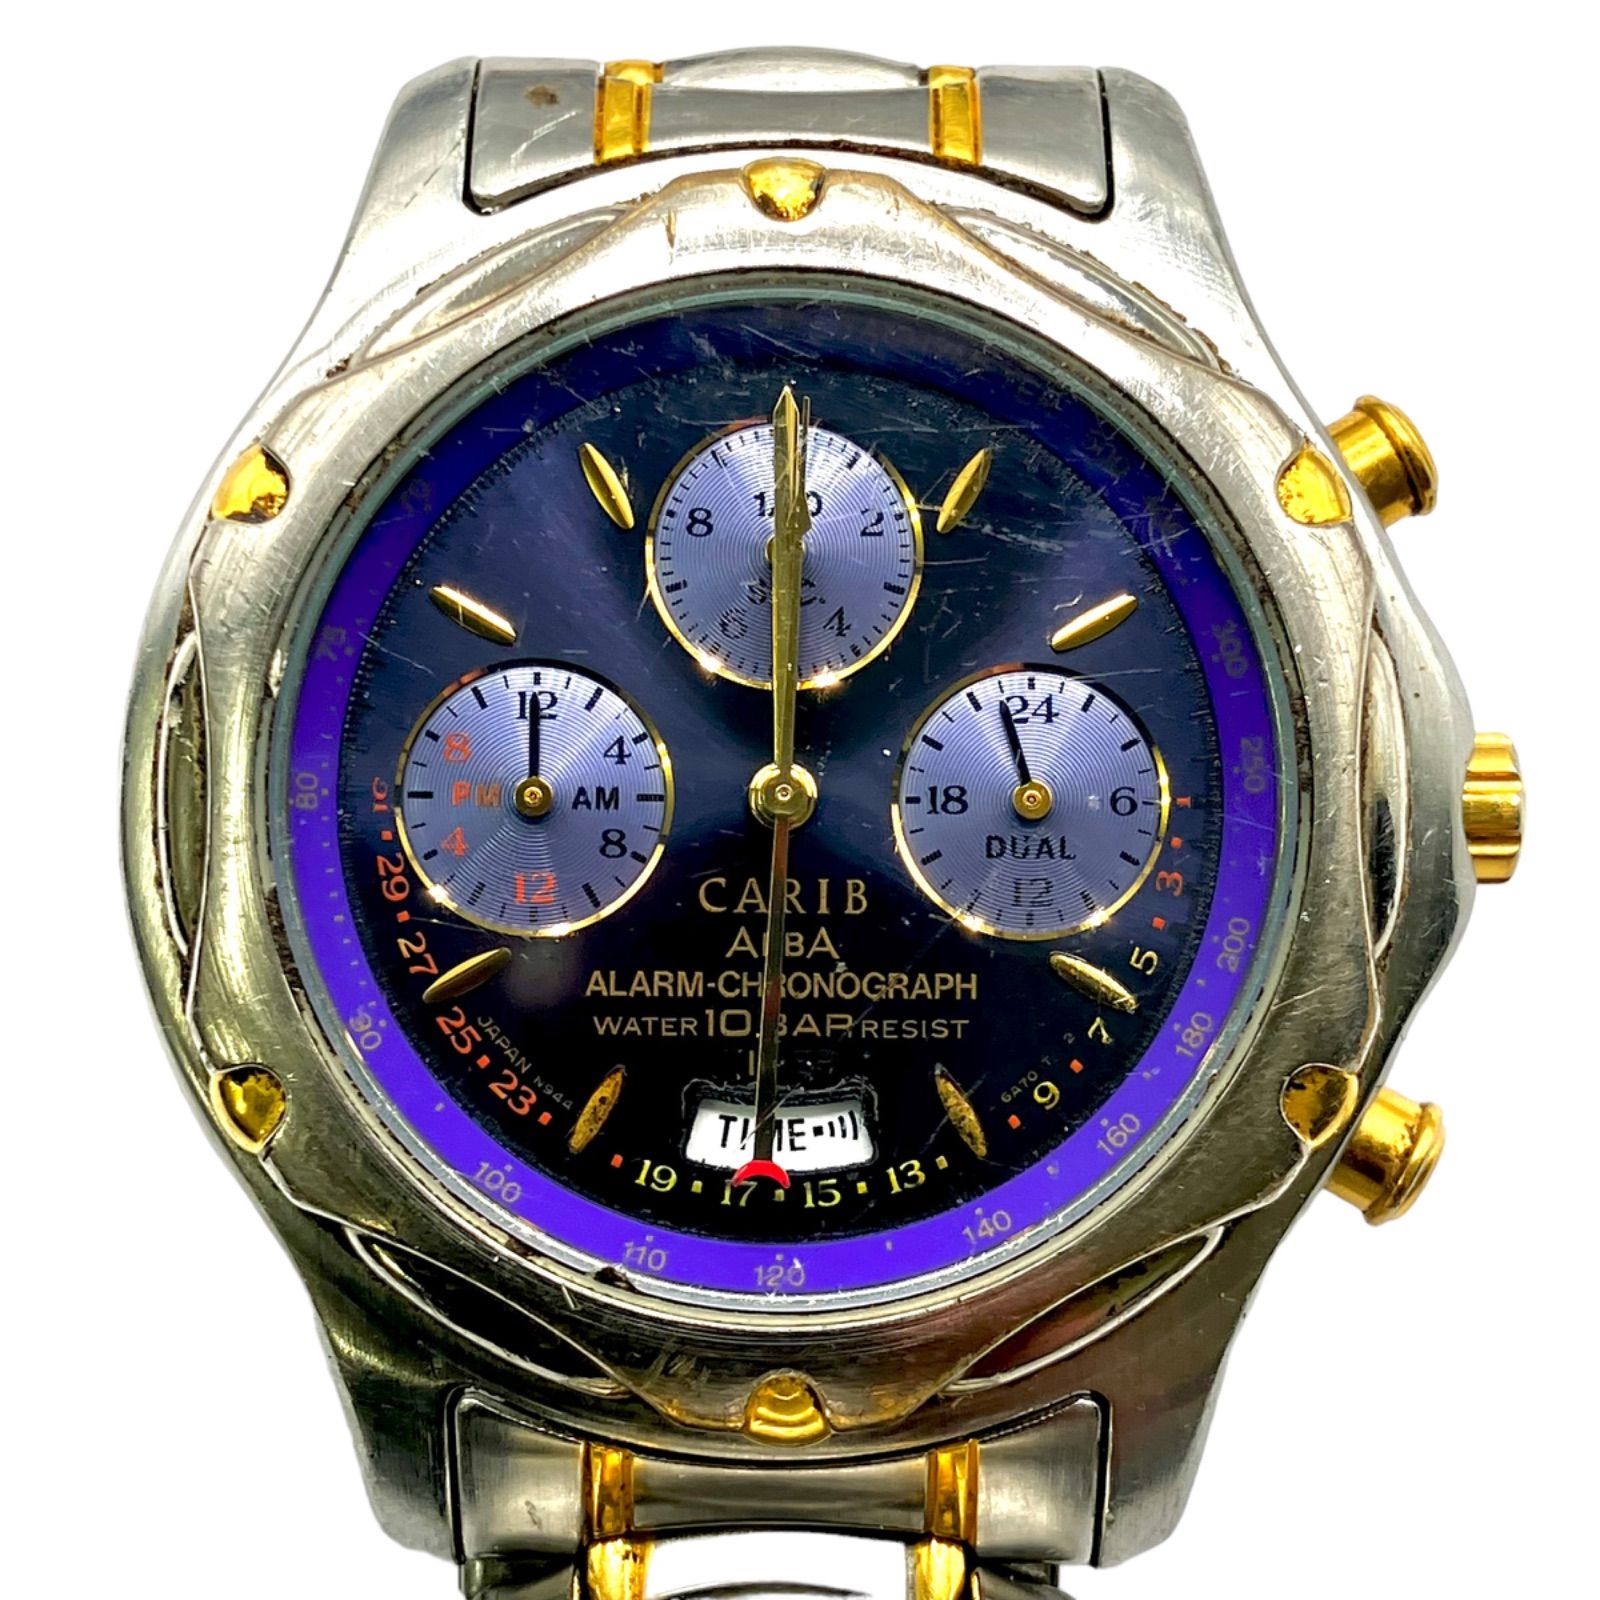 SEIKO ALBA CARIB セイコーアルバカリブ メンズ腕時計 - 腕時計